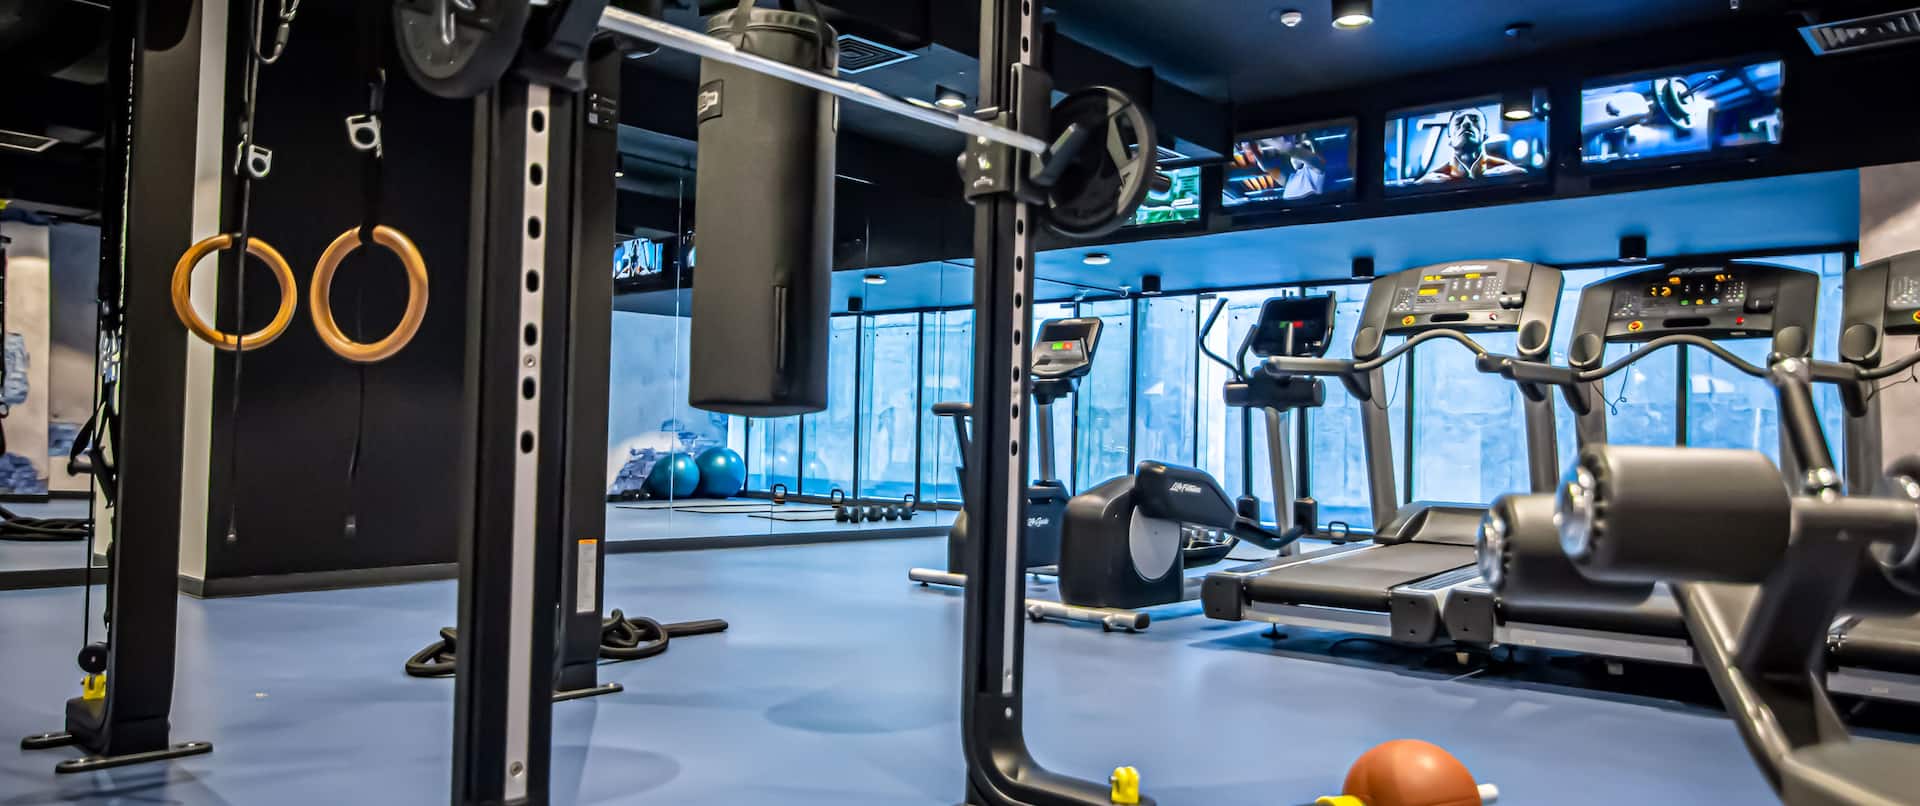 Gym with treadmills, weight racks and bodyweight training equipment